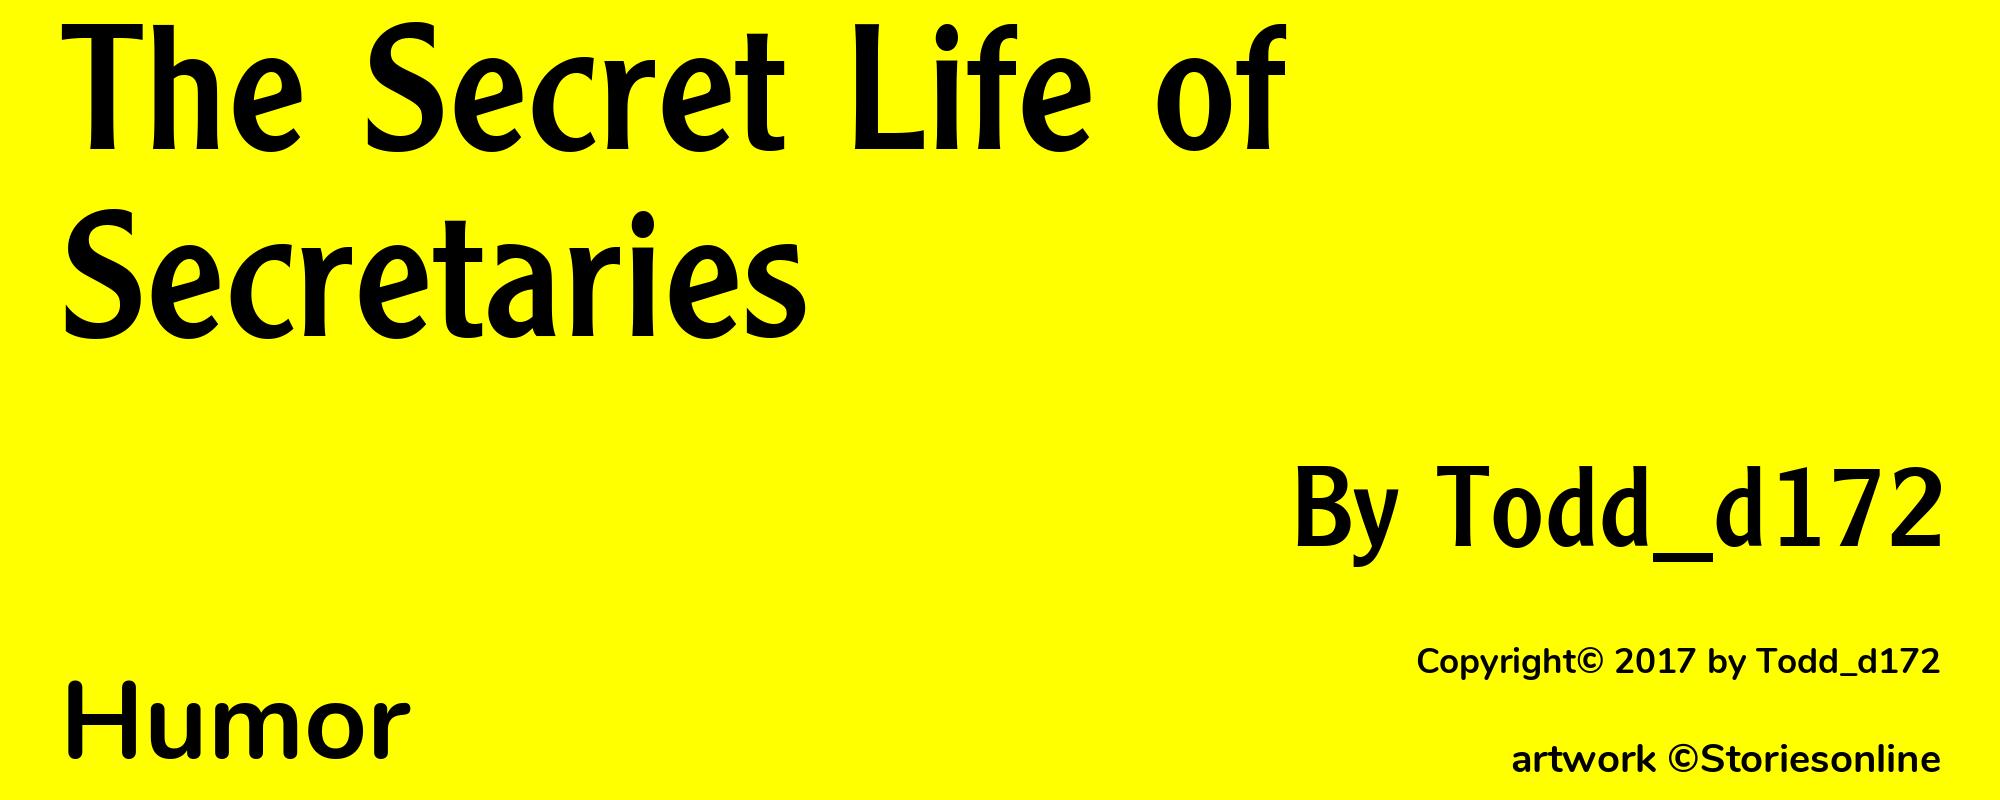 The Secret Life of Secretaries - Cover